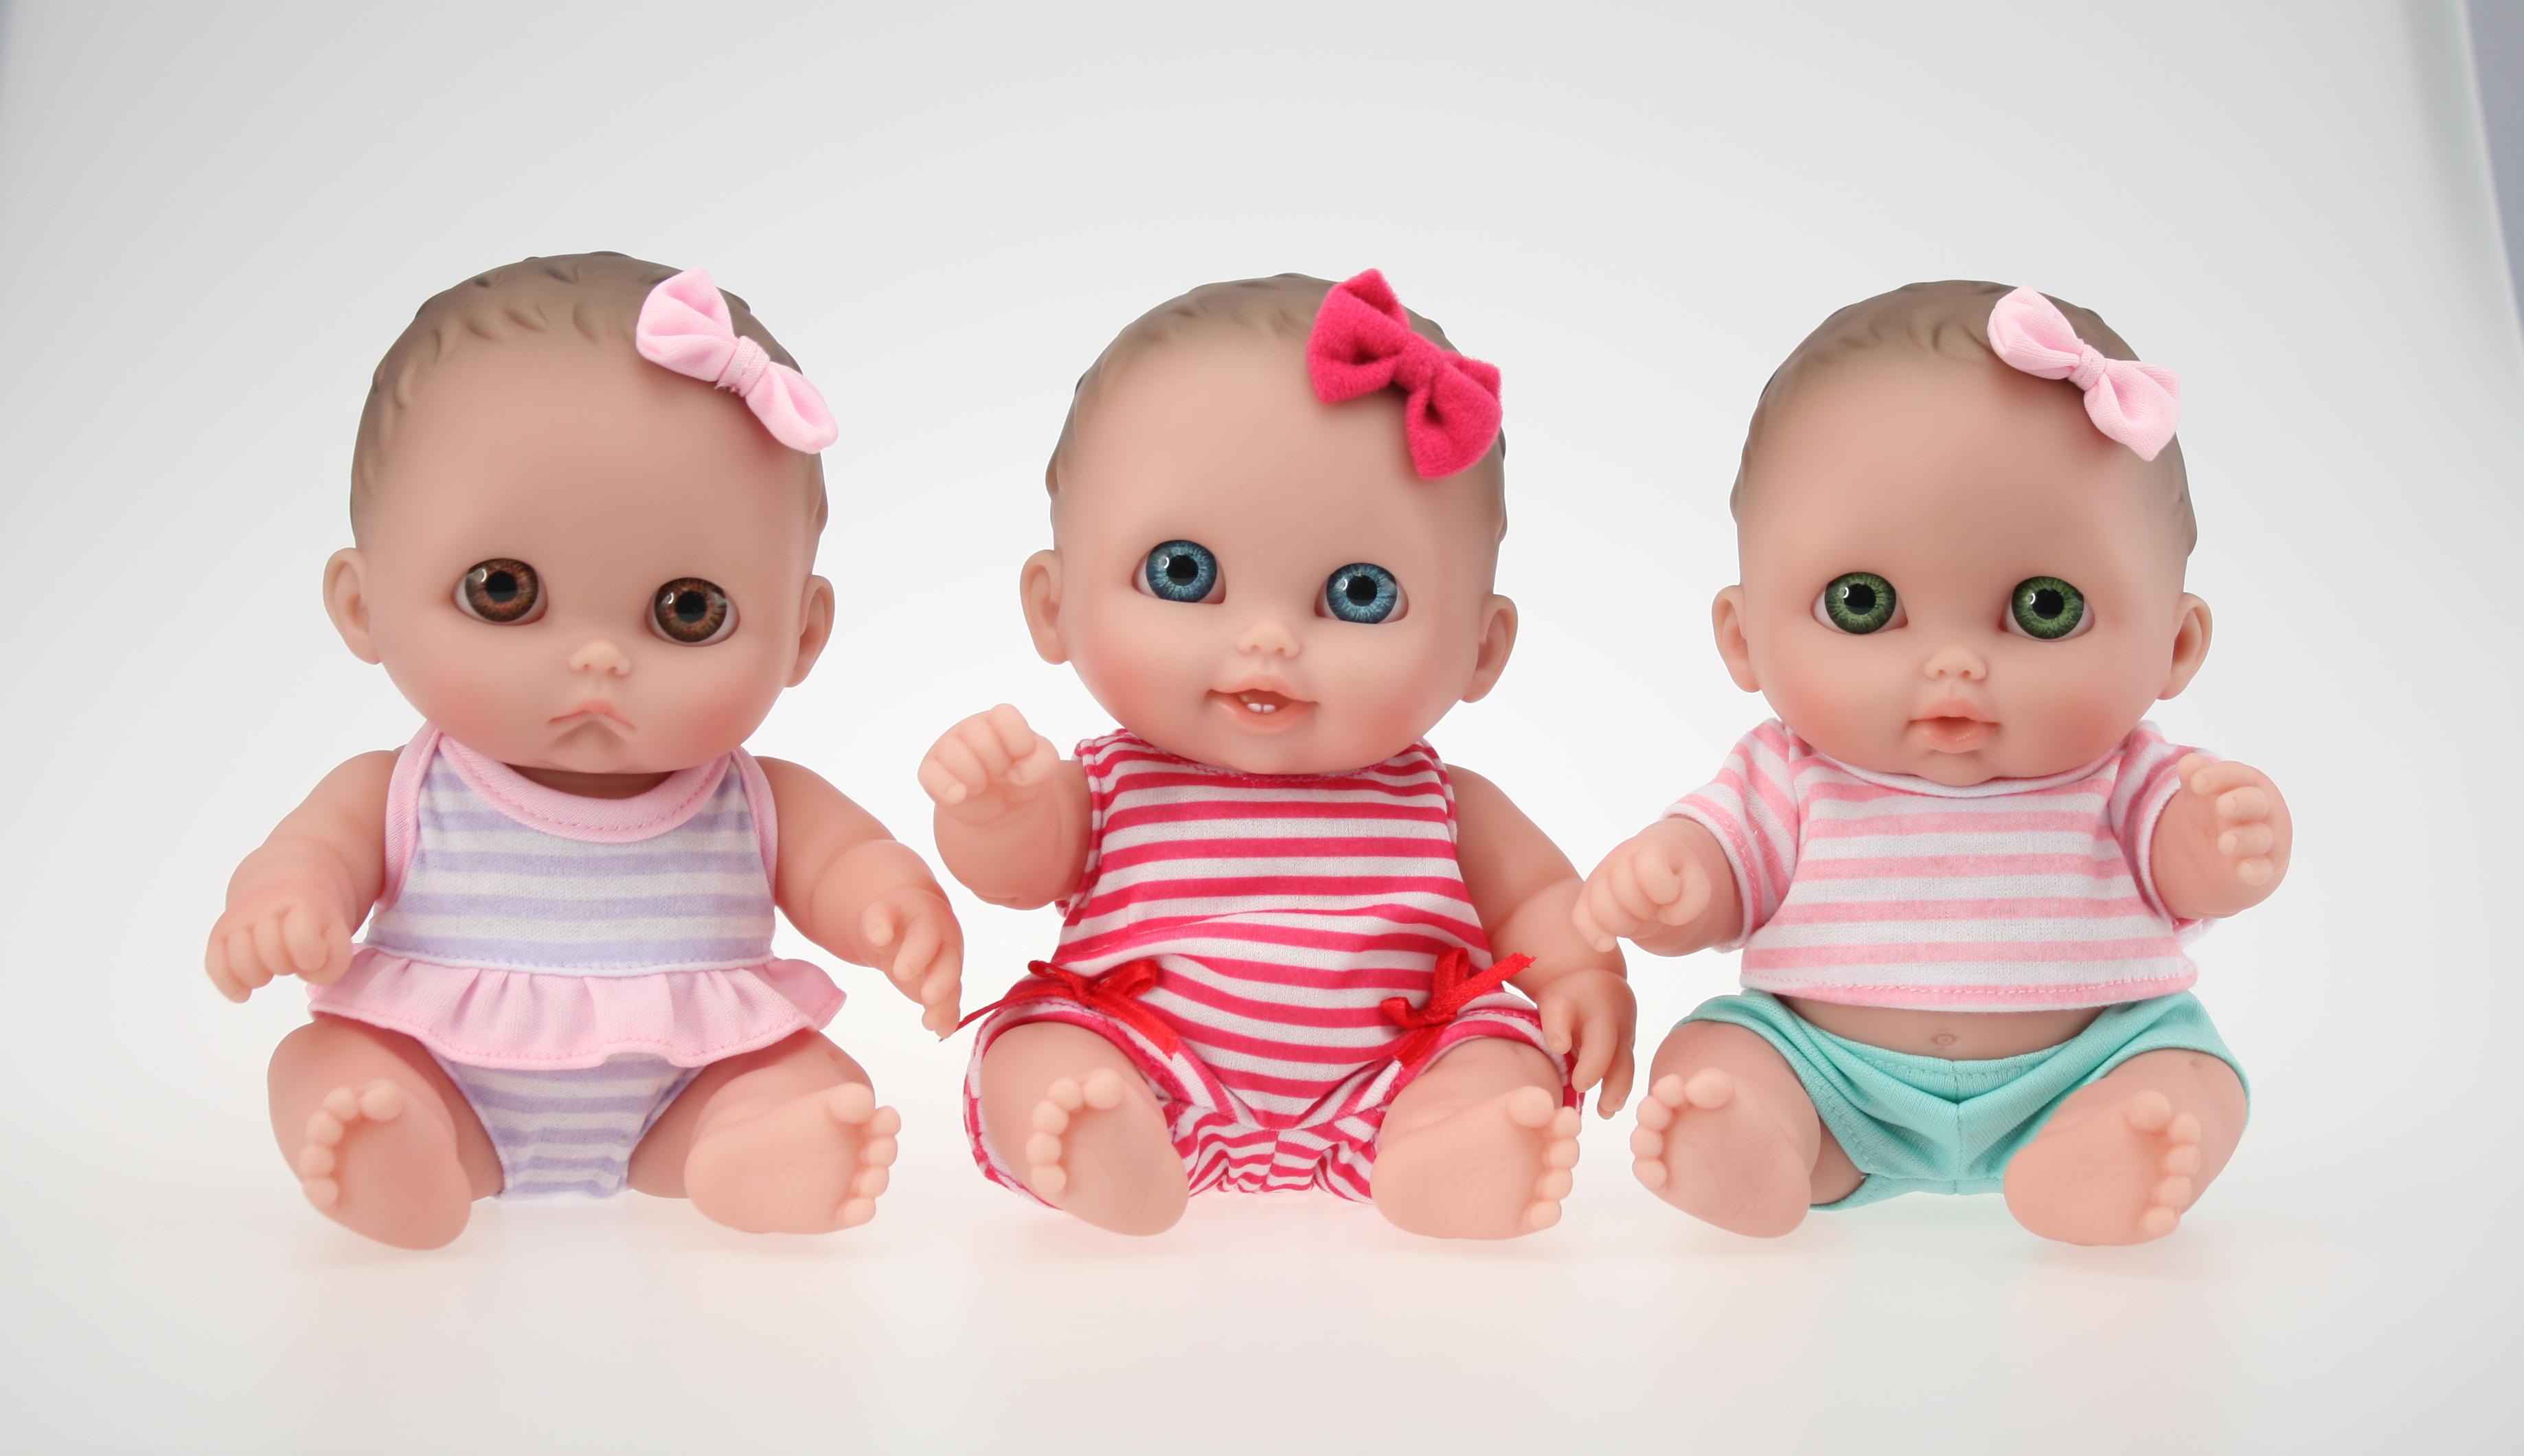 Детская кукла пупс. Кукла малыш. Пупсы куклы для девочек. Маленький пупсик игрушка. Современные куклы пупсы.